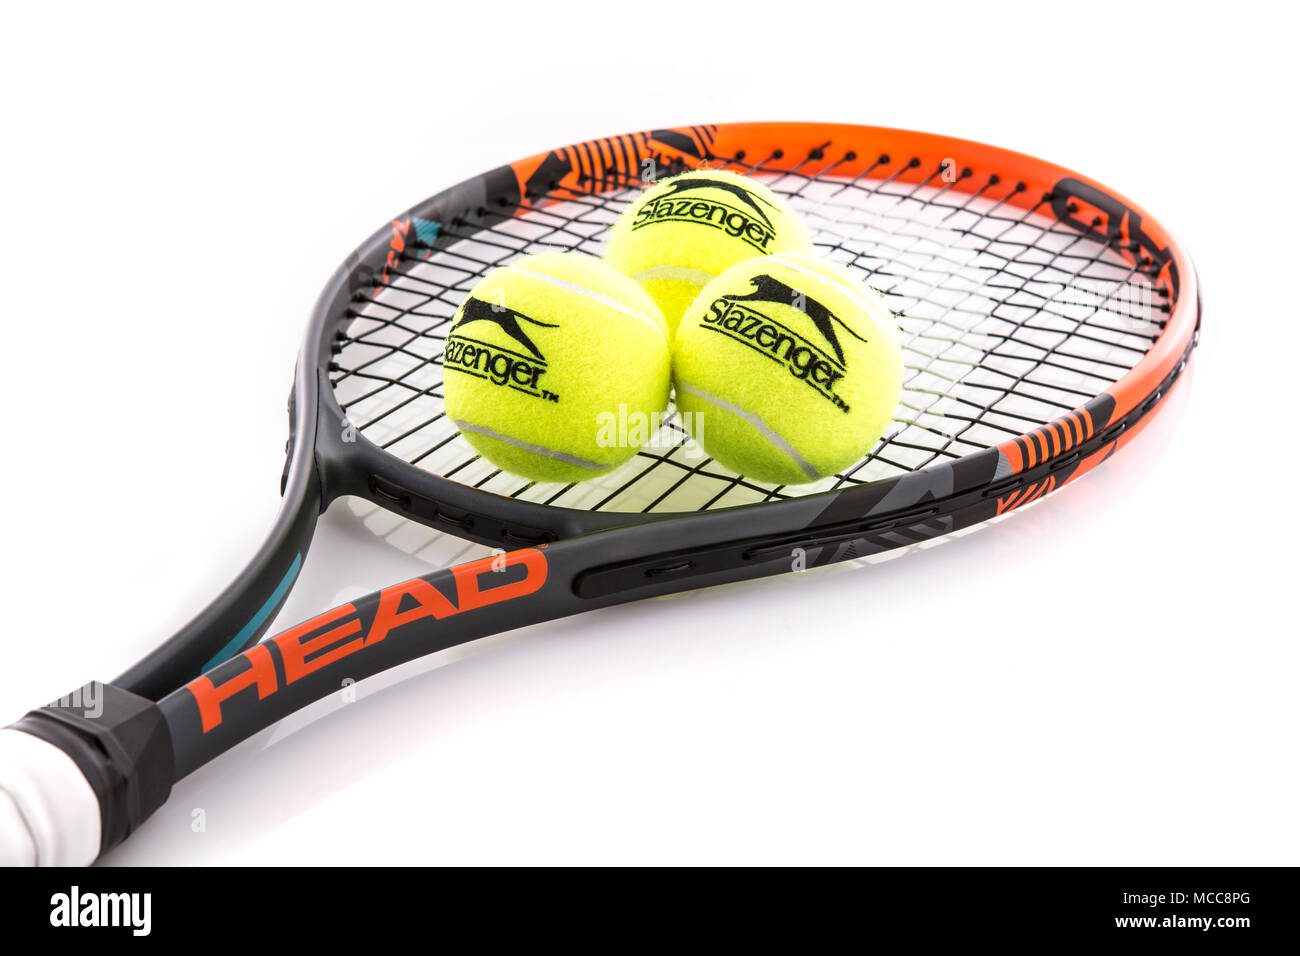 SWINDON, UK - APRIL 15, 2018: Head Tennis Racket and Slazenger Ball on a  white background Stock Photo - Alamy